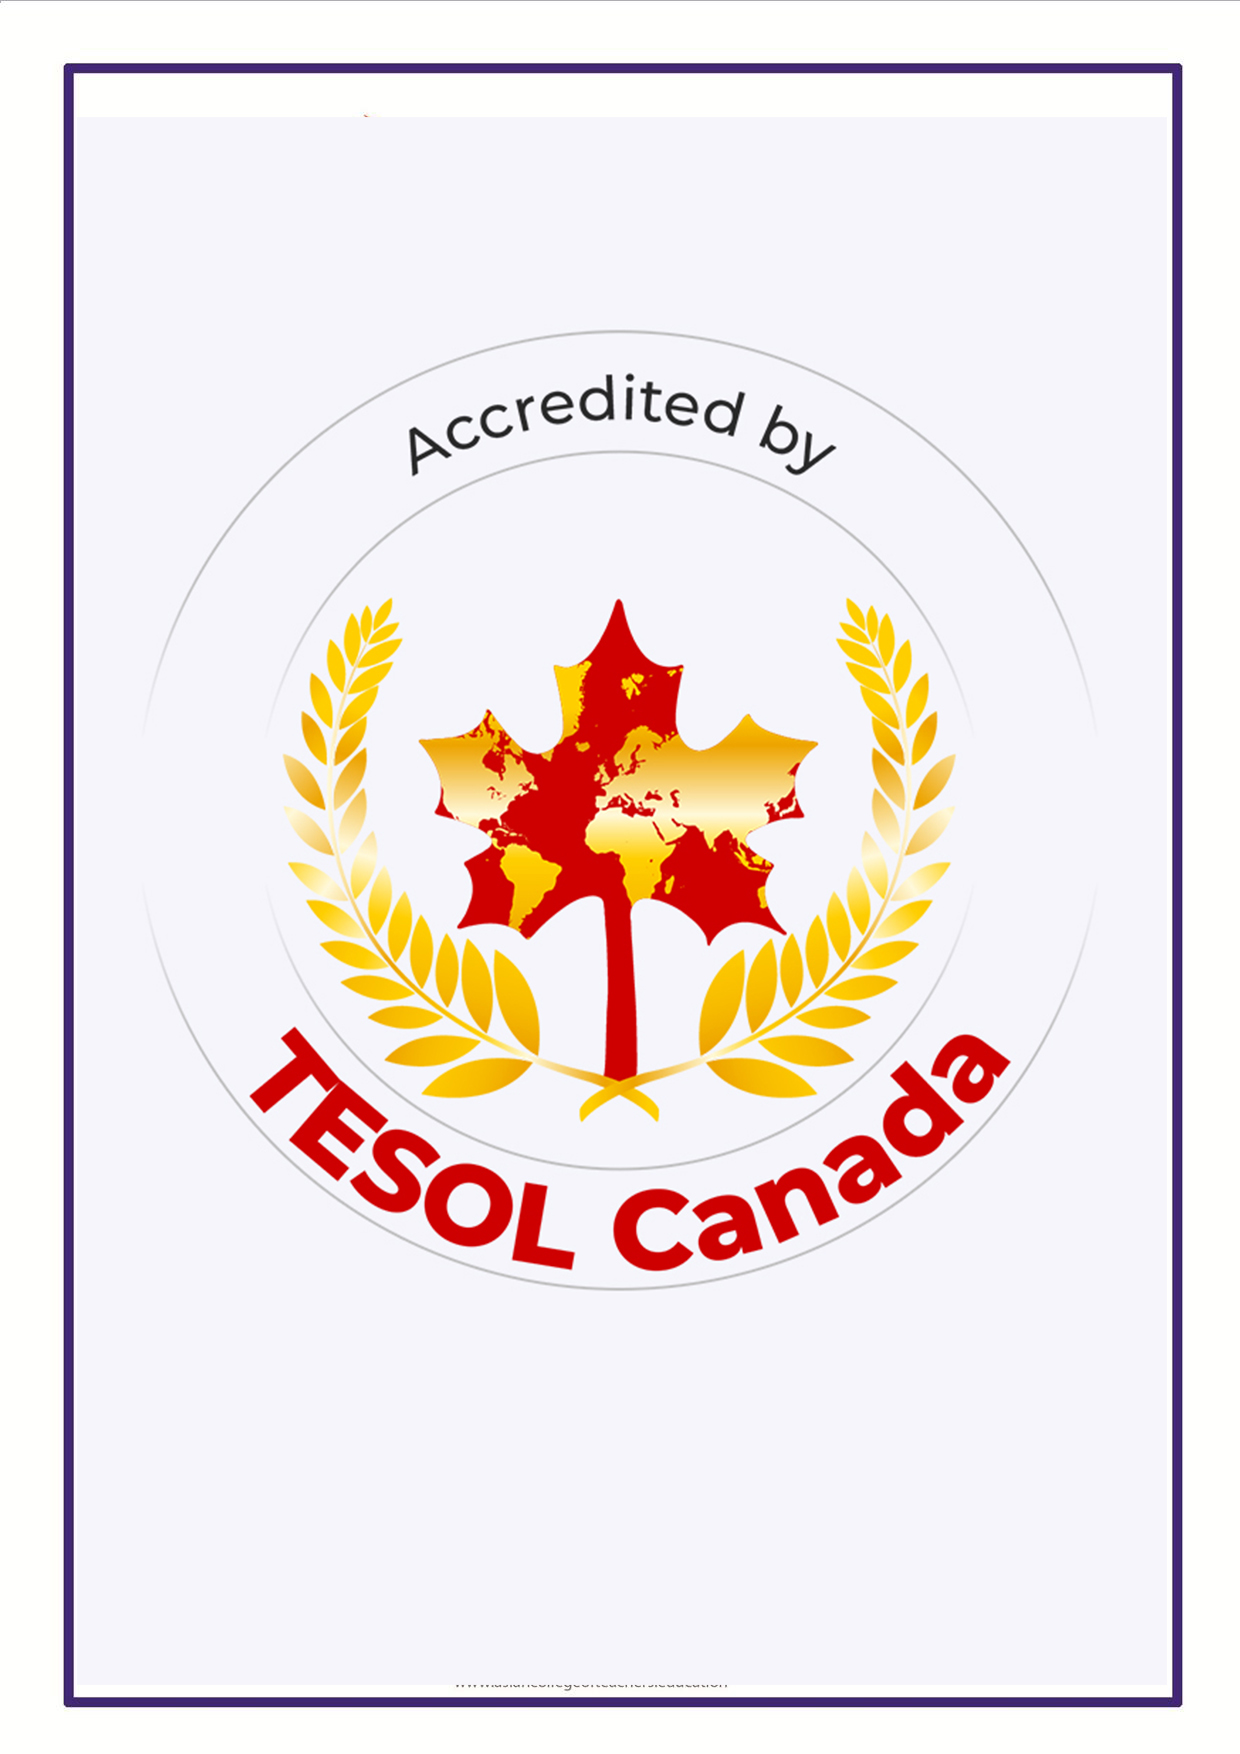 Accridated By TESOL Canada